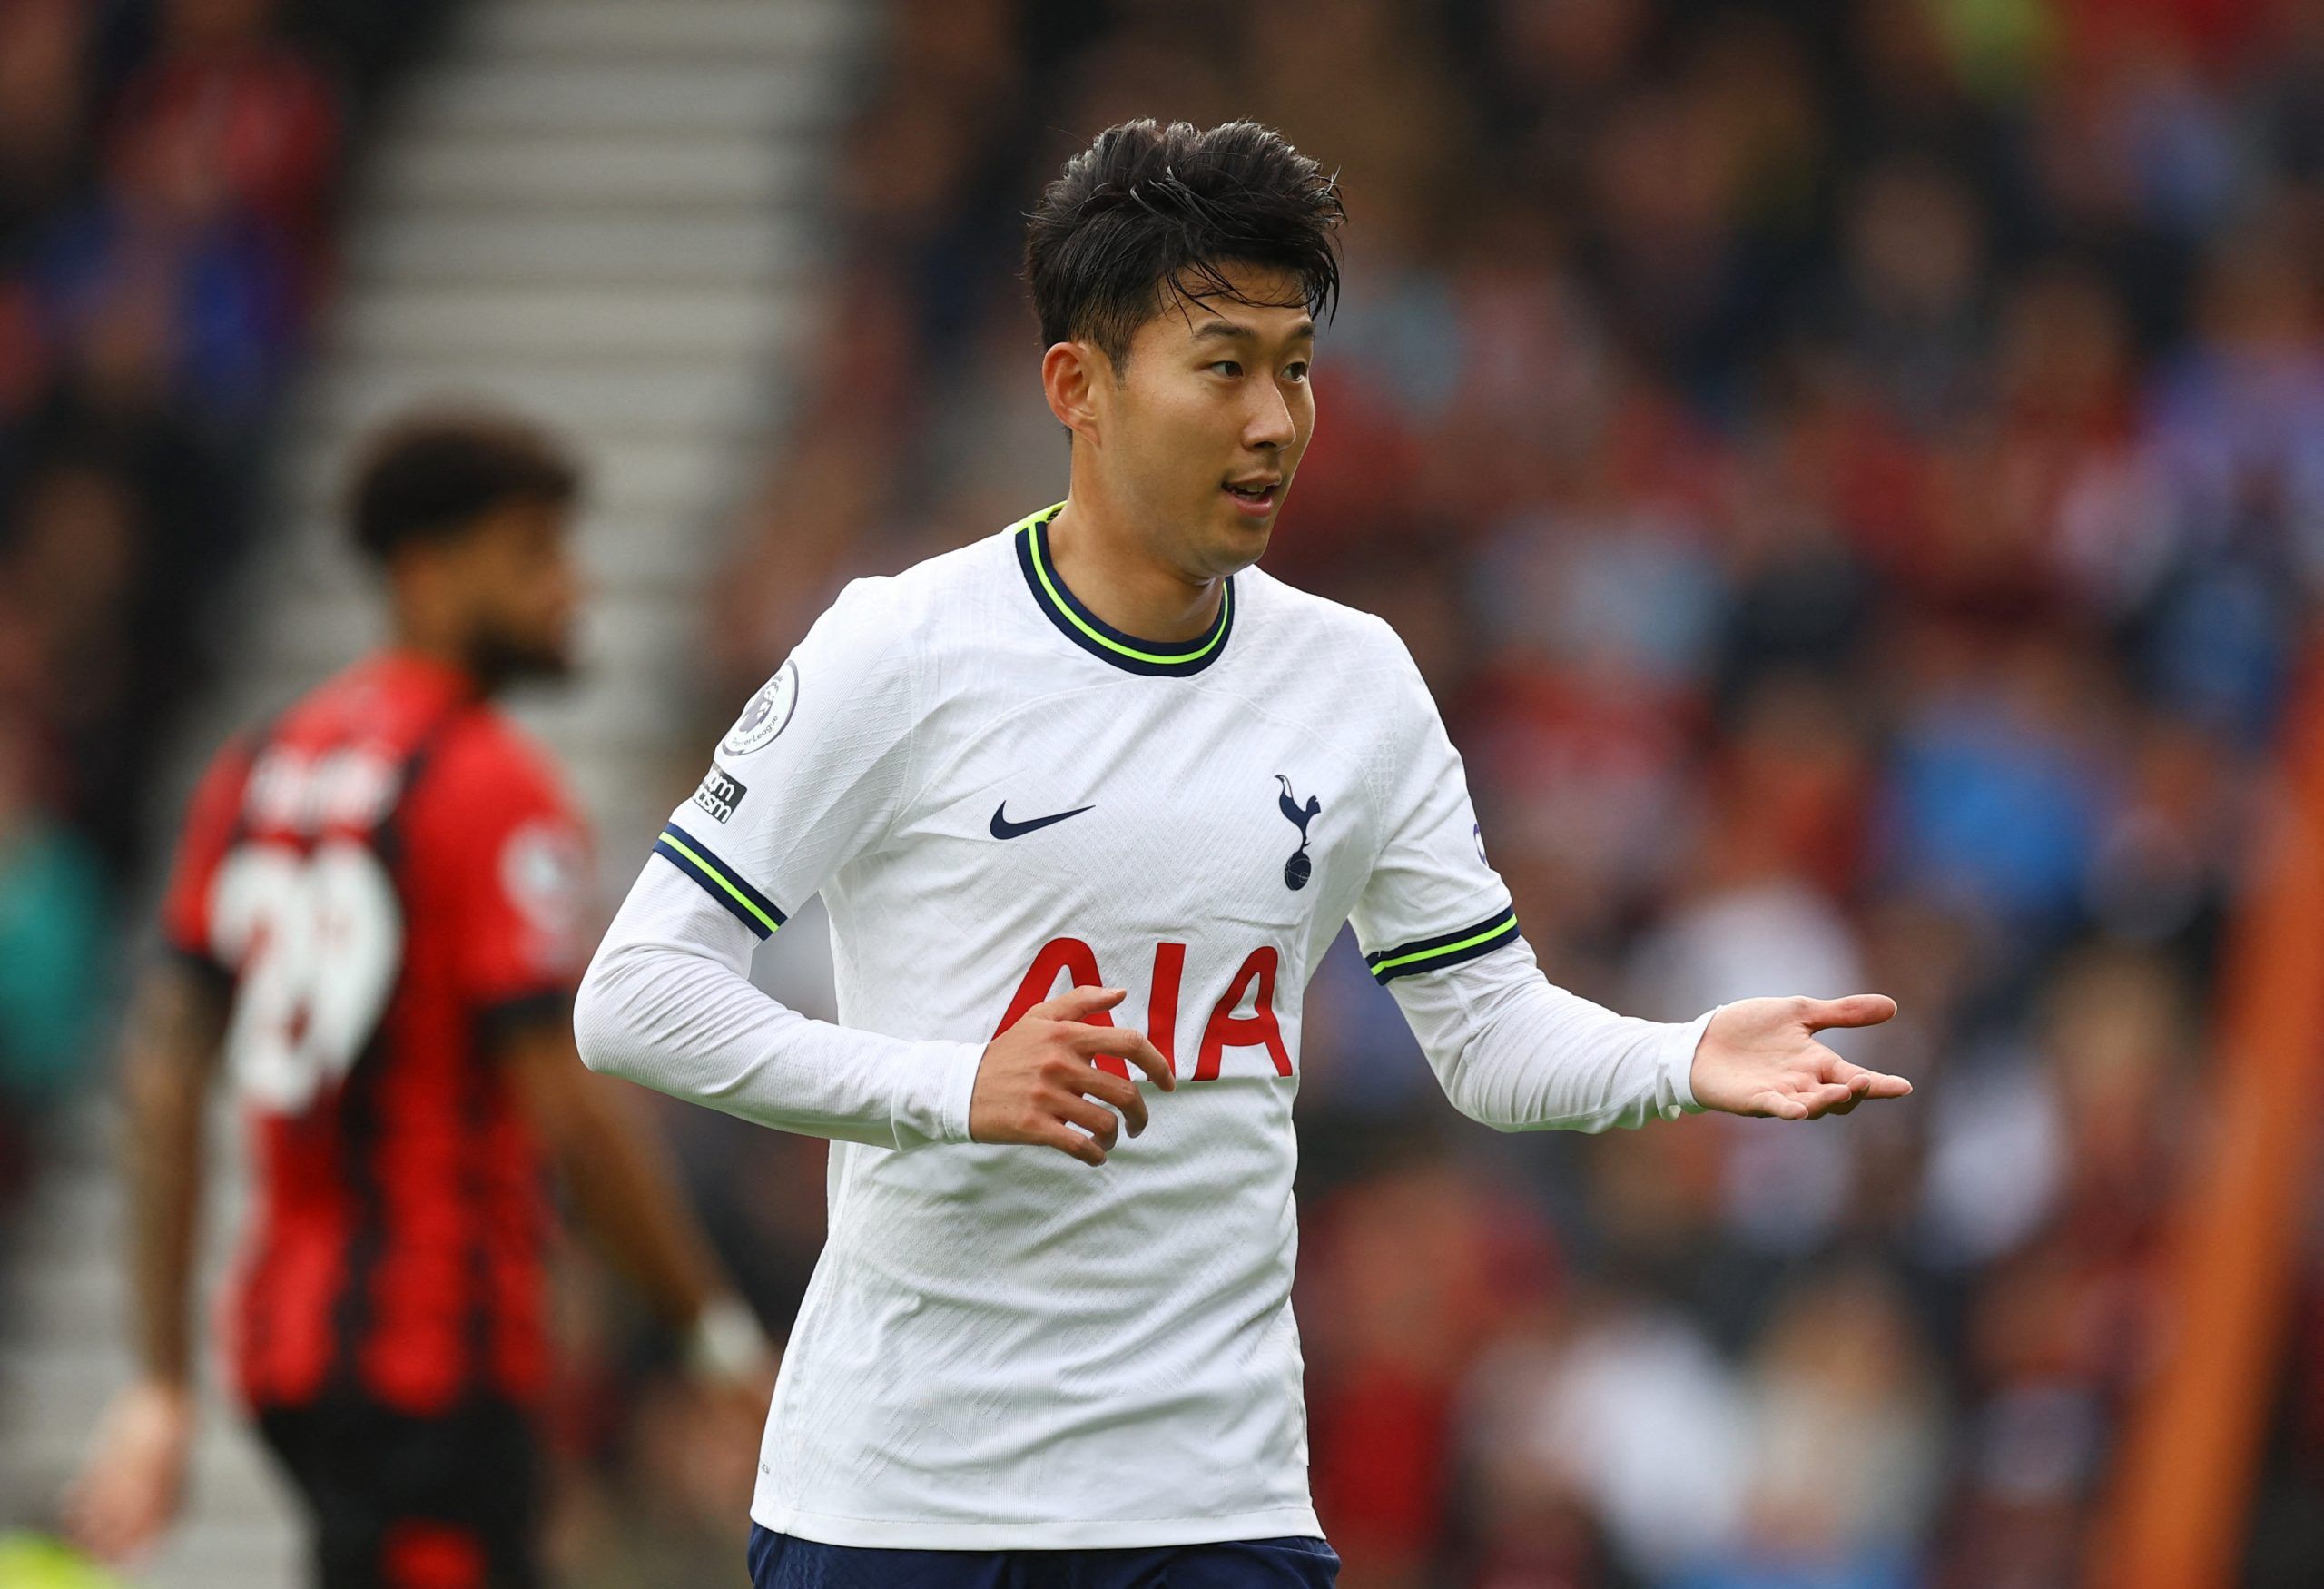 Tottenham Hotspur: Son Heung-min could leave, says pundit -Tottenham Hotspur News